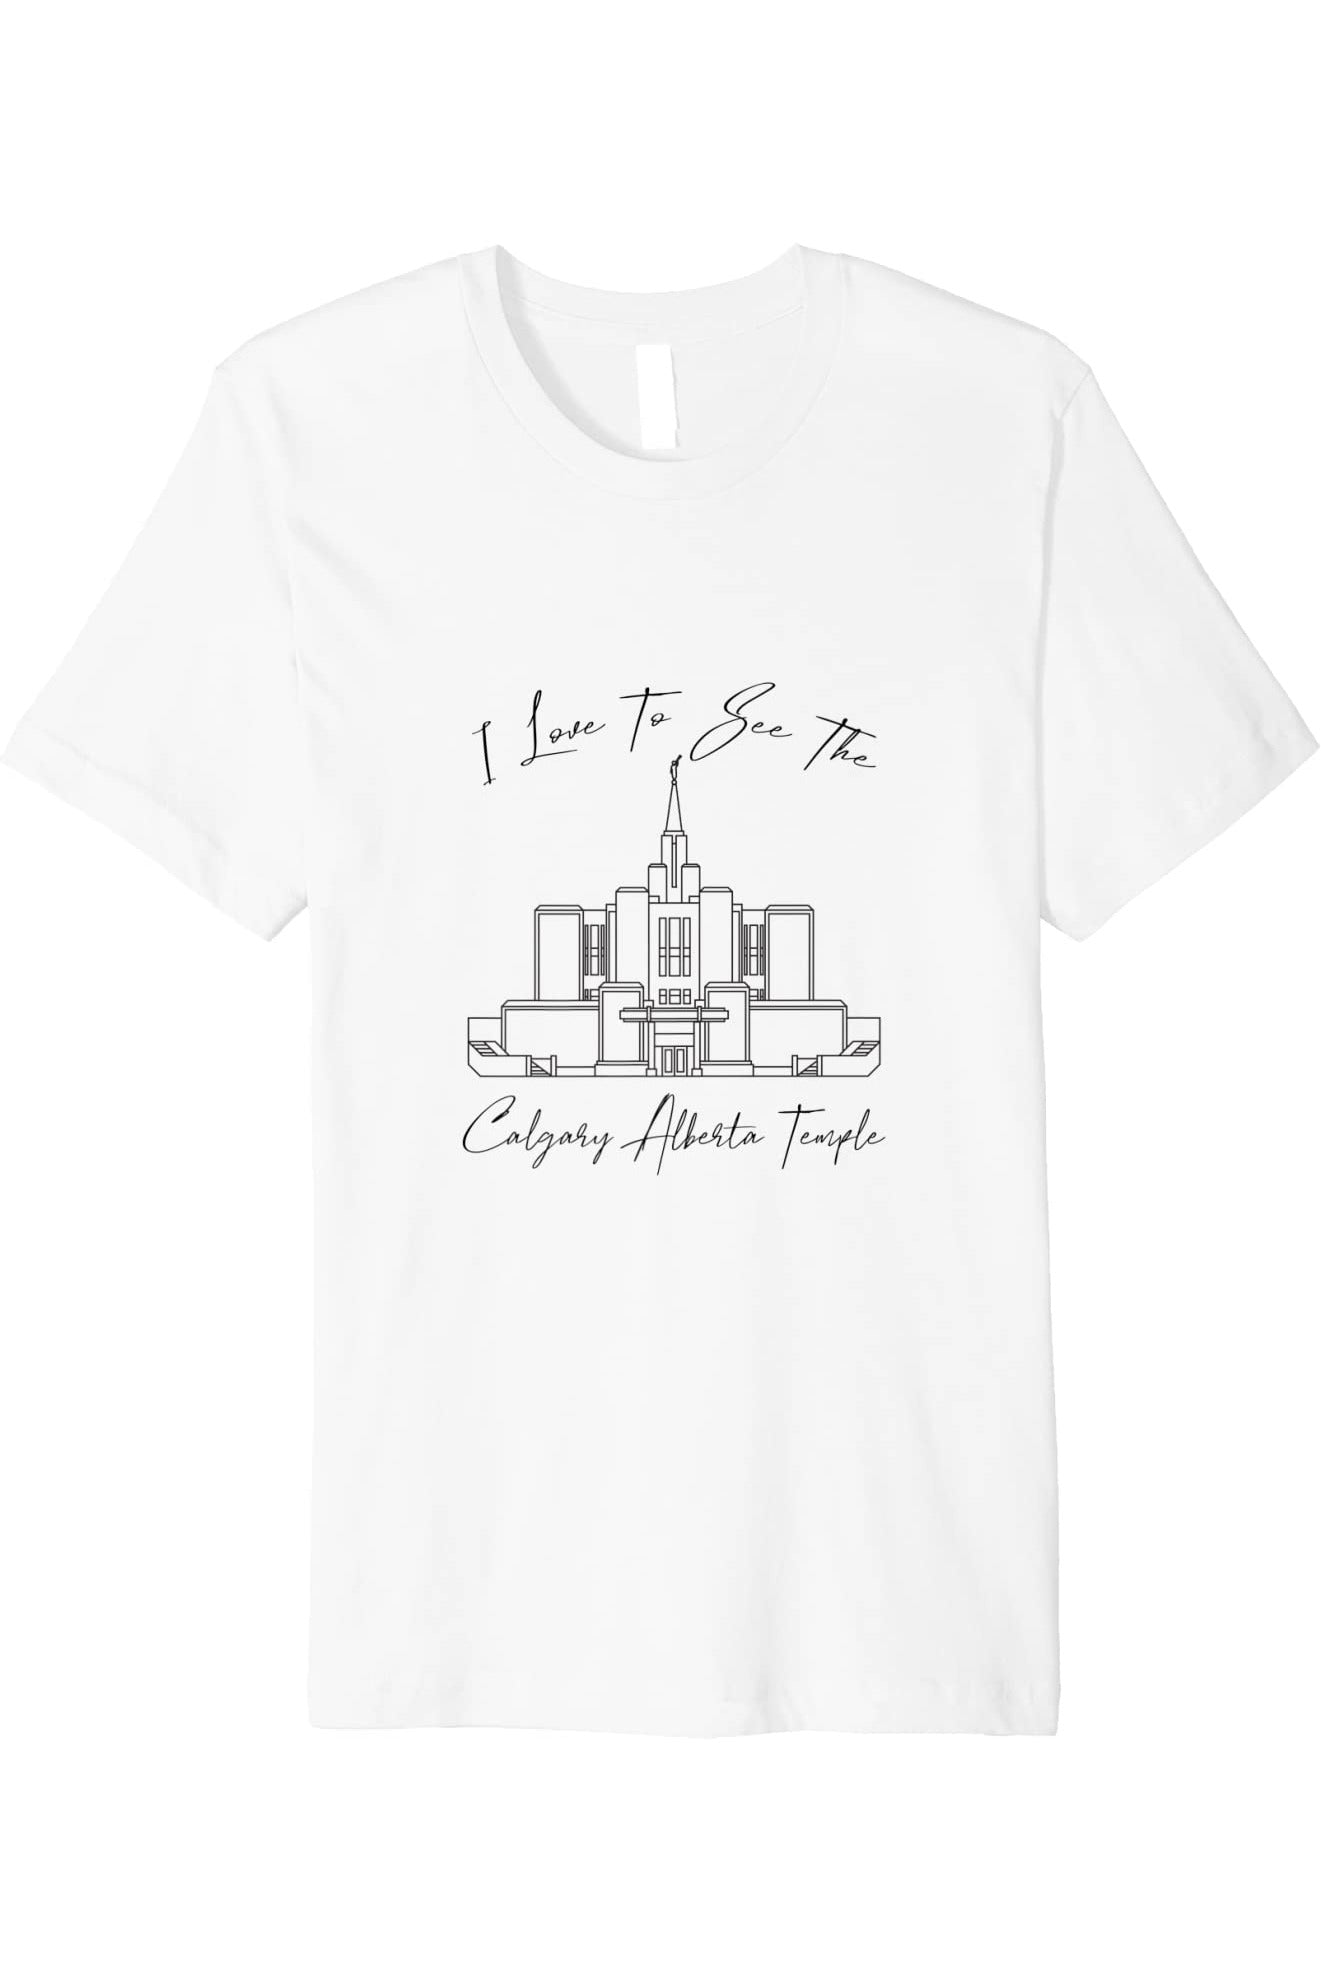 Calgary Alberta Temple T-Shirt - Premium - Calligraphy Style (English) US